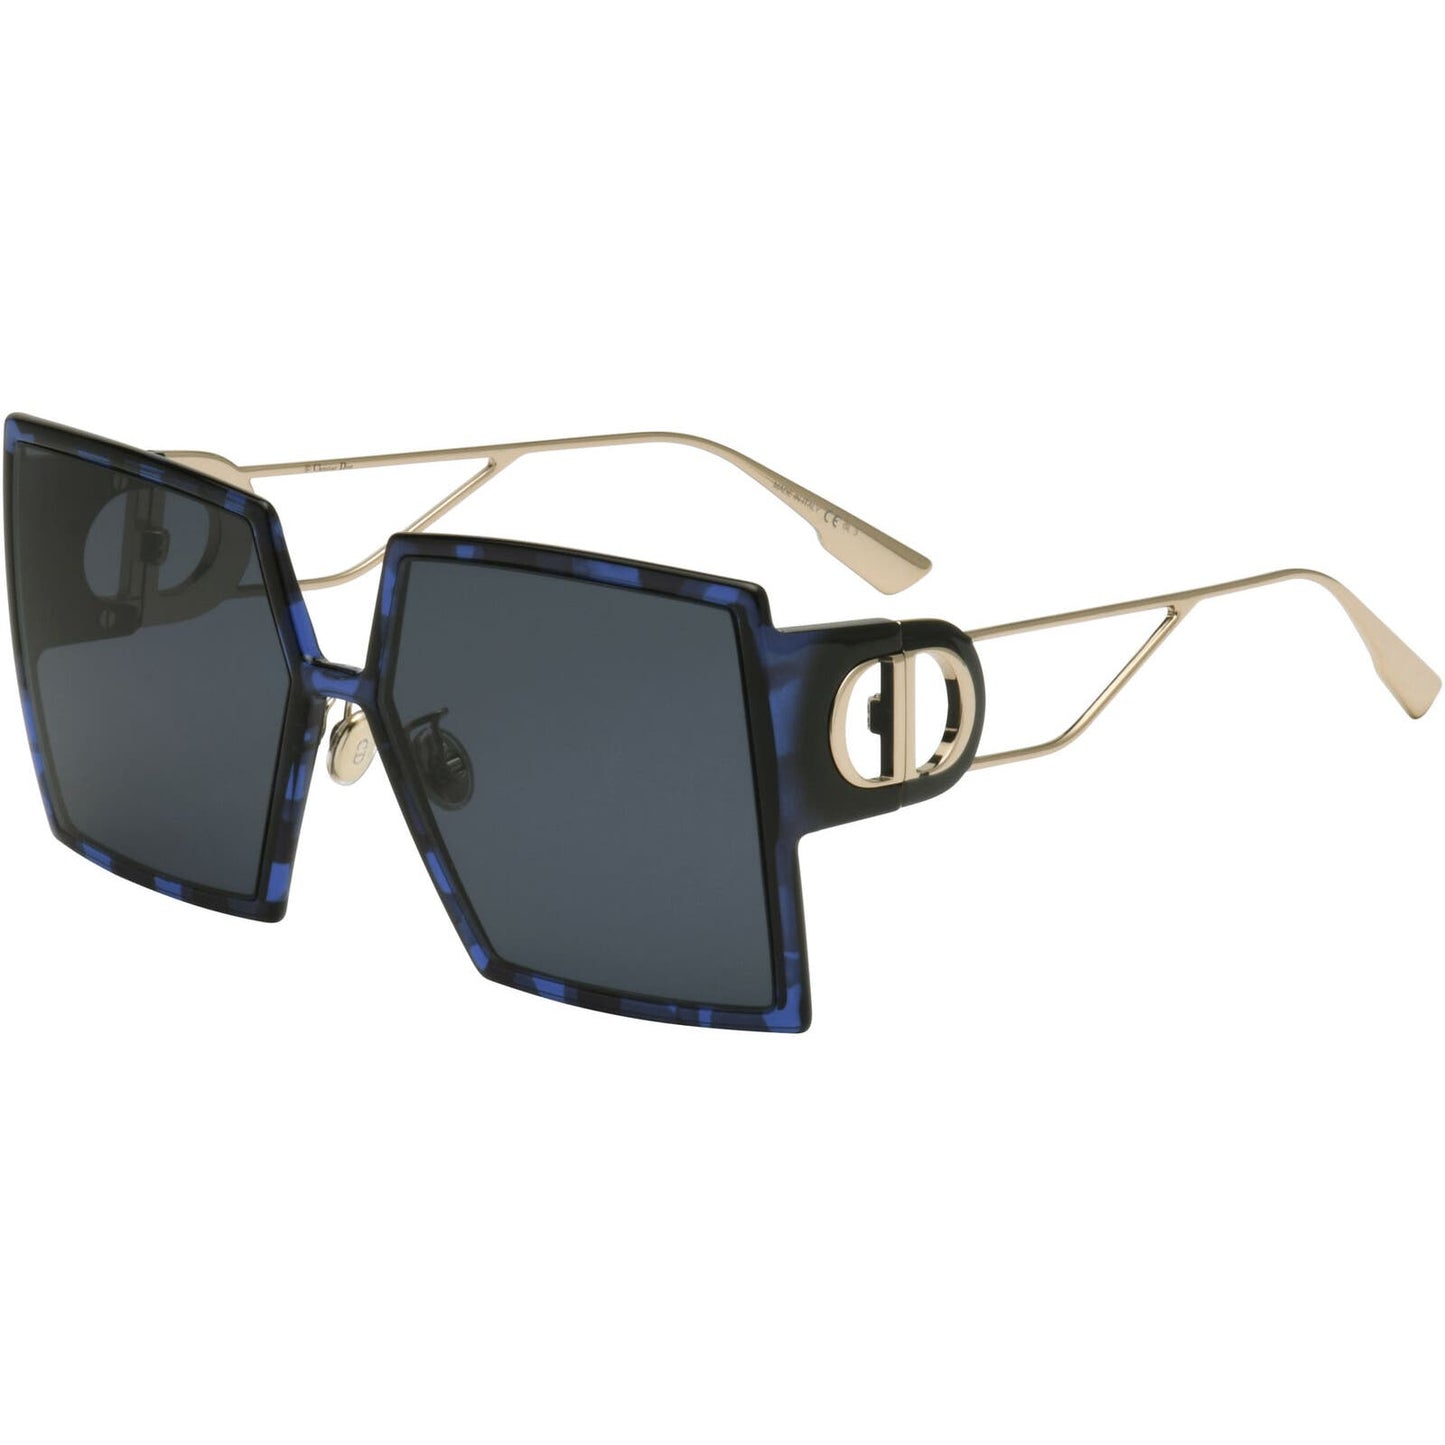 Dior Large Blue & Black Havana Sunglasses, “30 Montaigne”